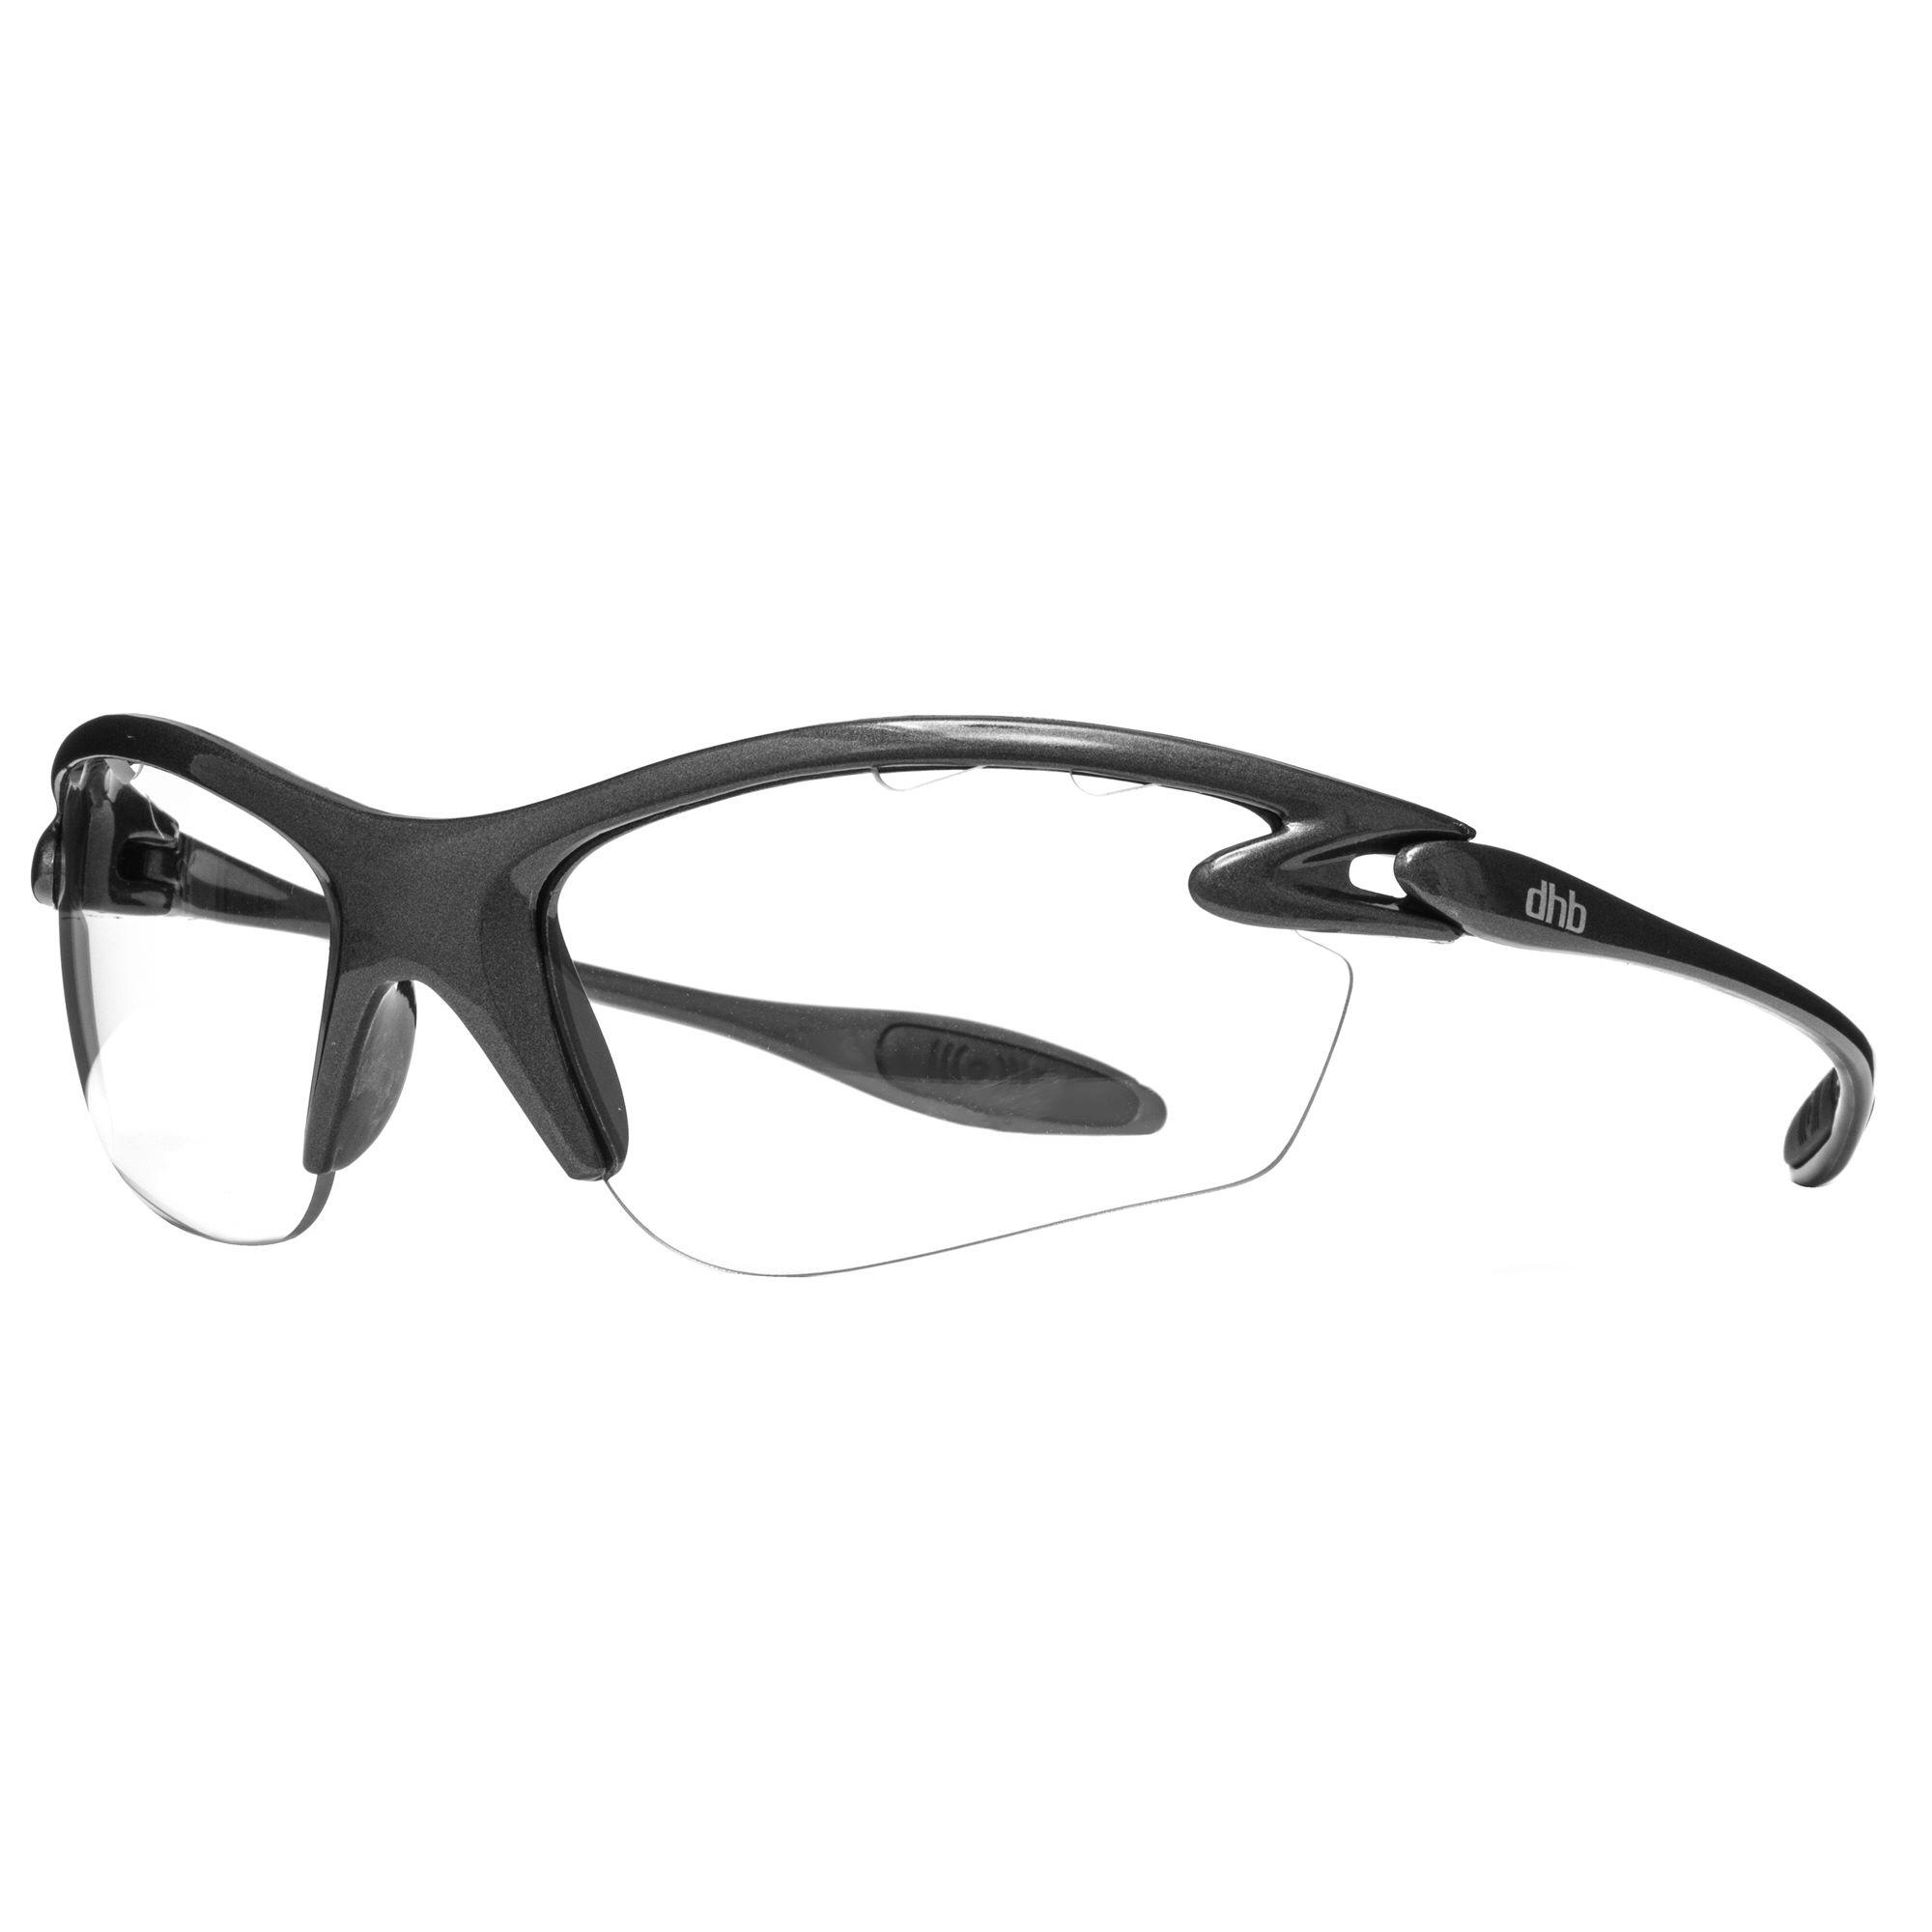 Dhb Ultralite Sunglasses  Gunmetal/clear